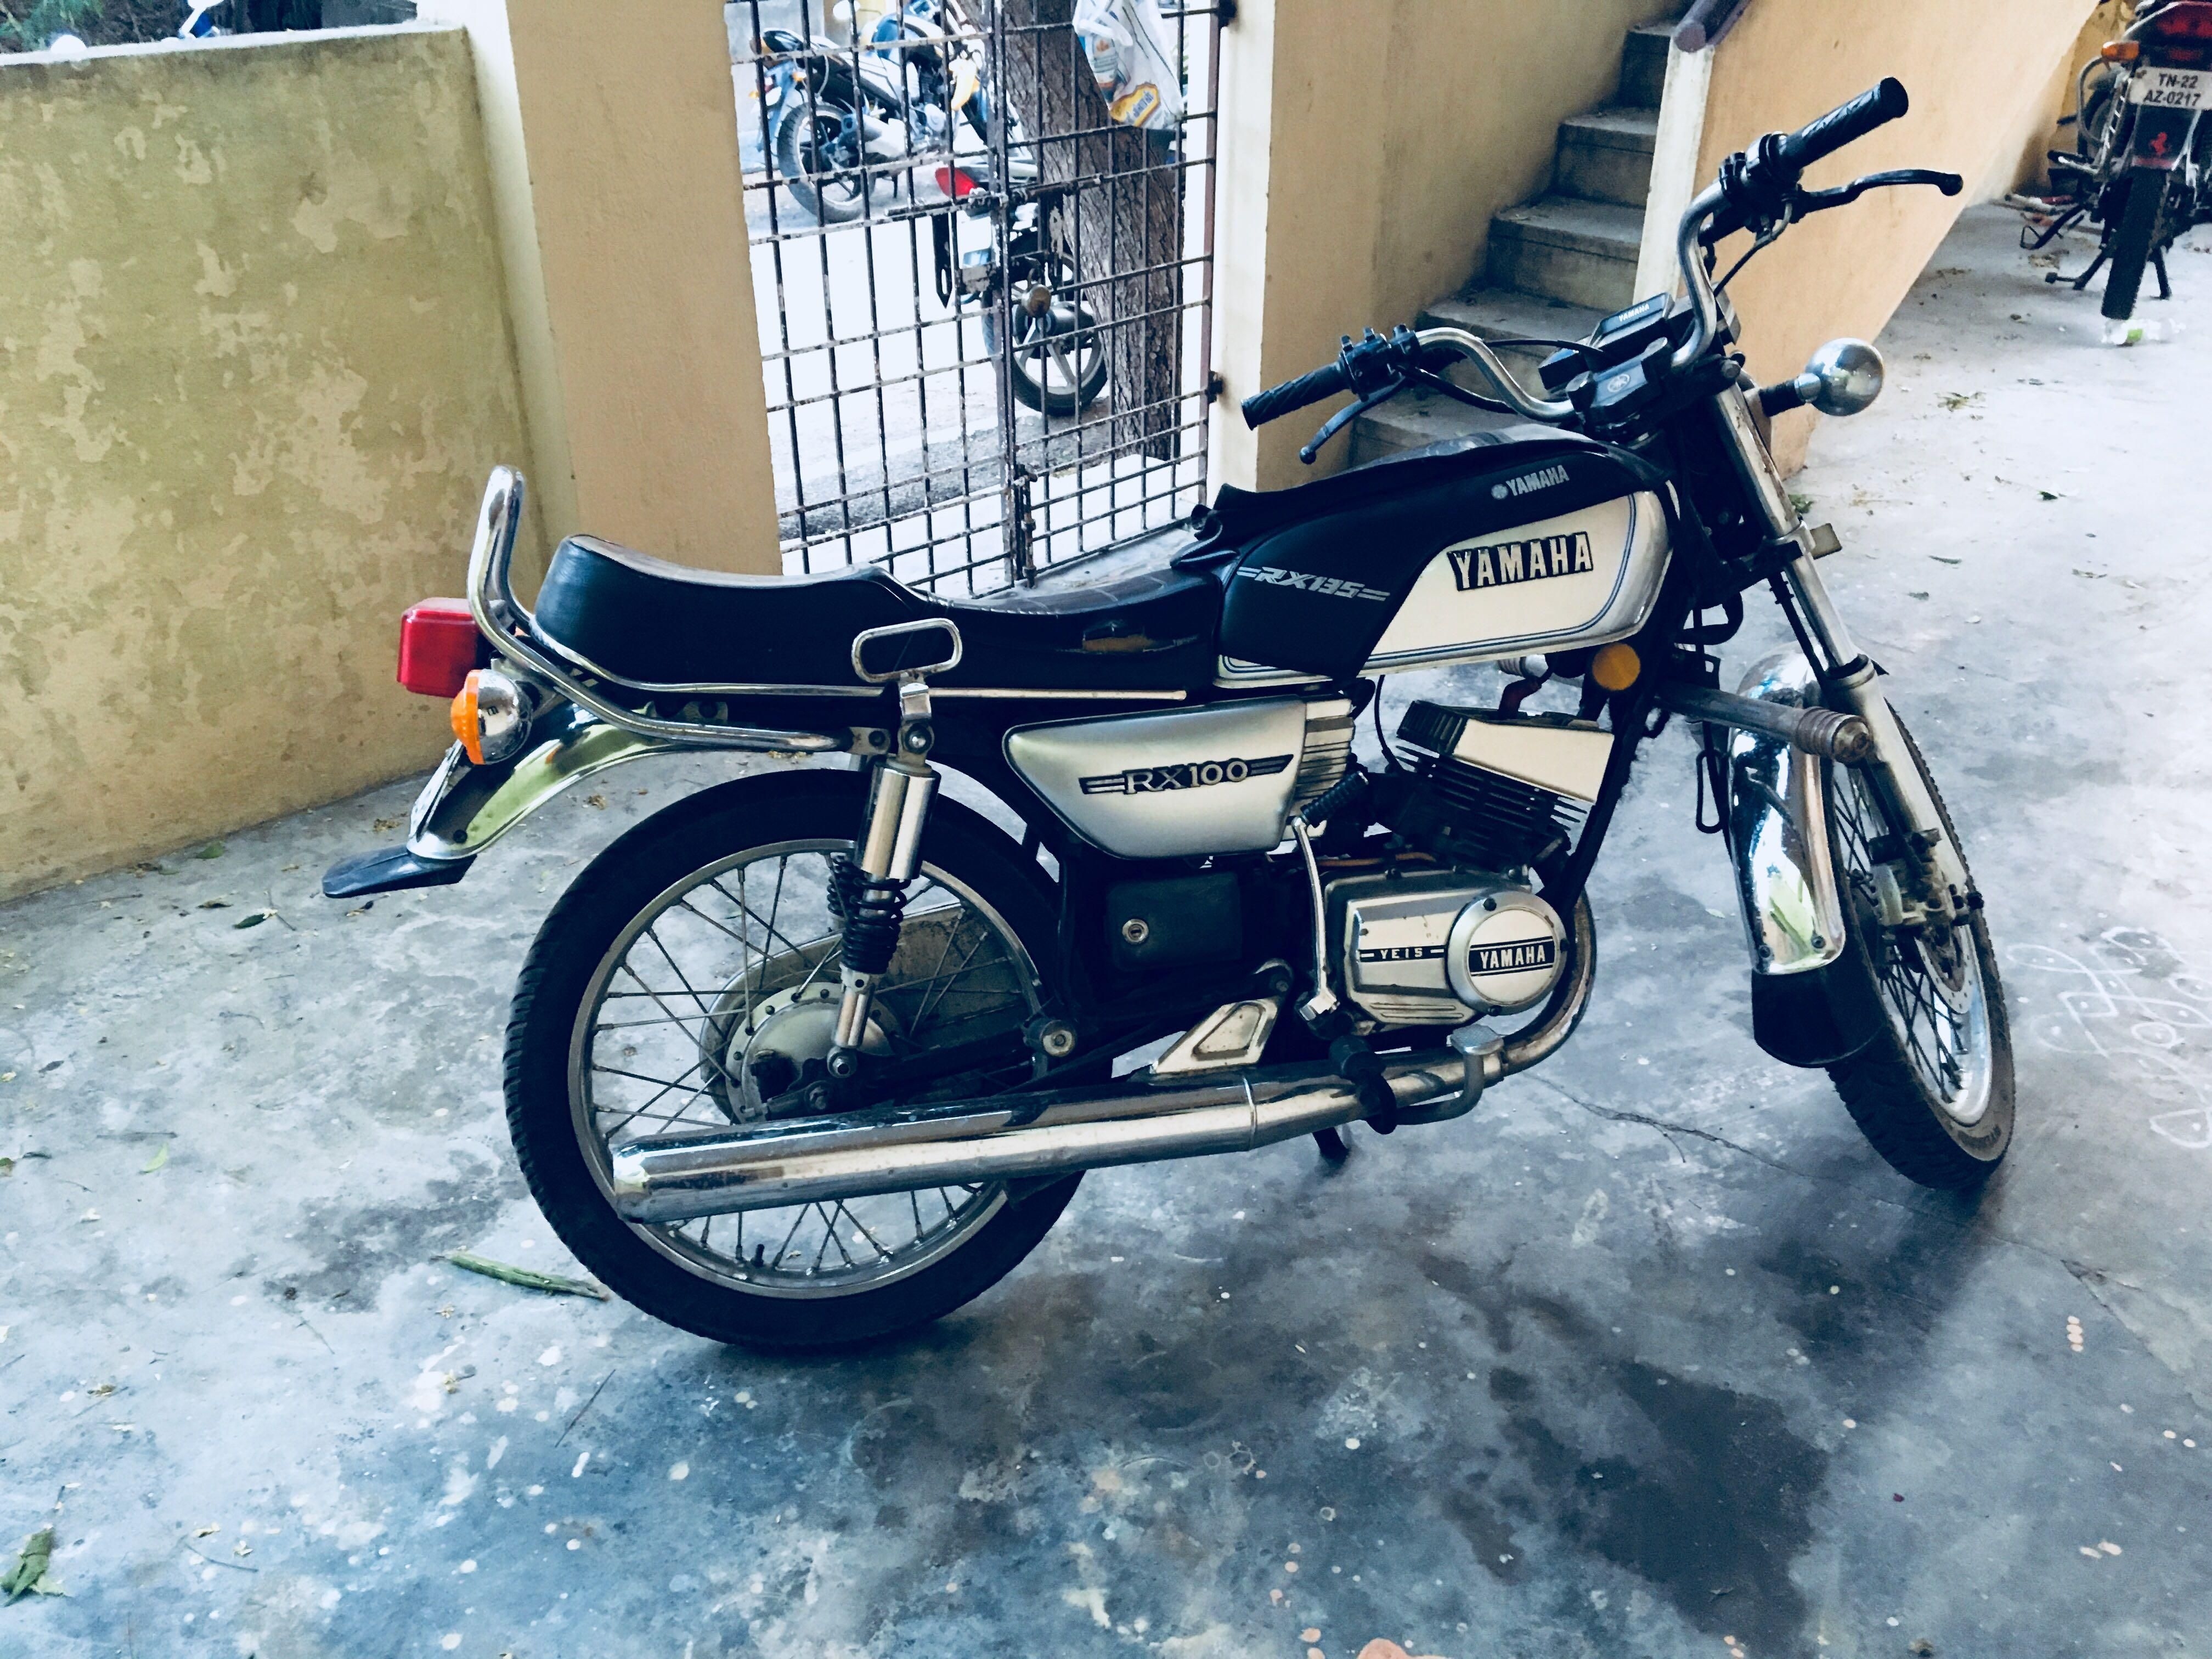 Yamaha Rx 100 Bike For Sale In Chennai Id 1416100894 Droom